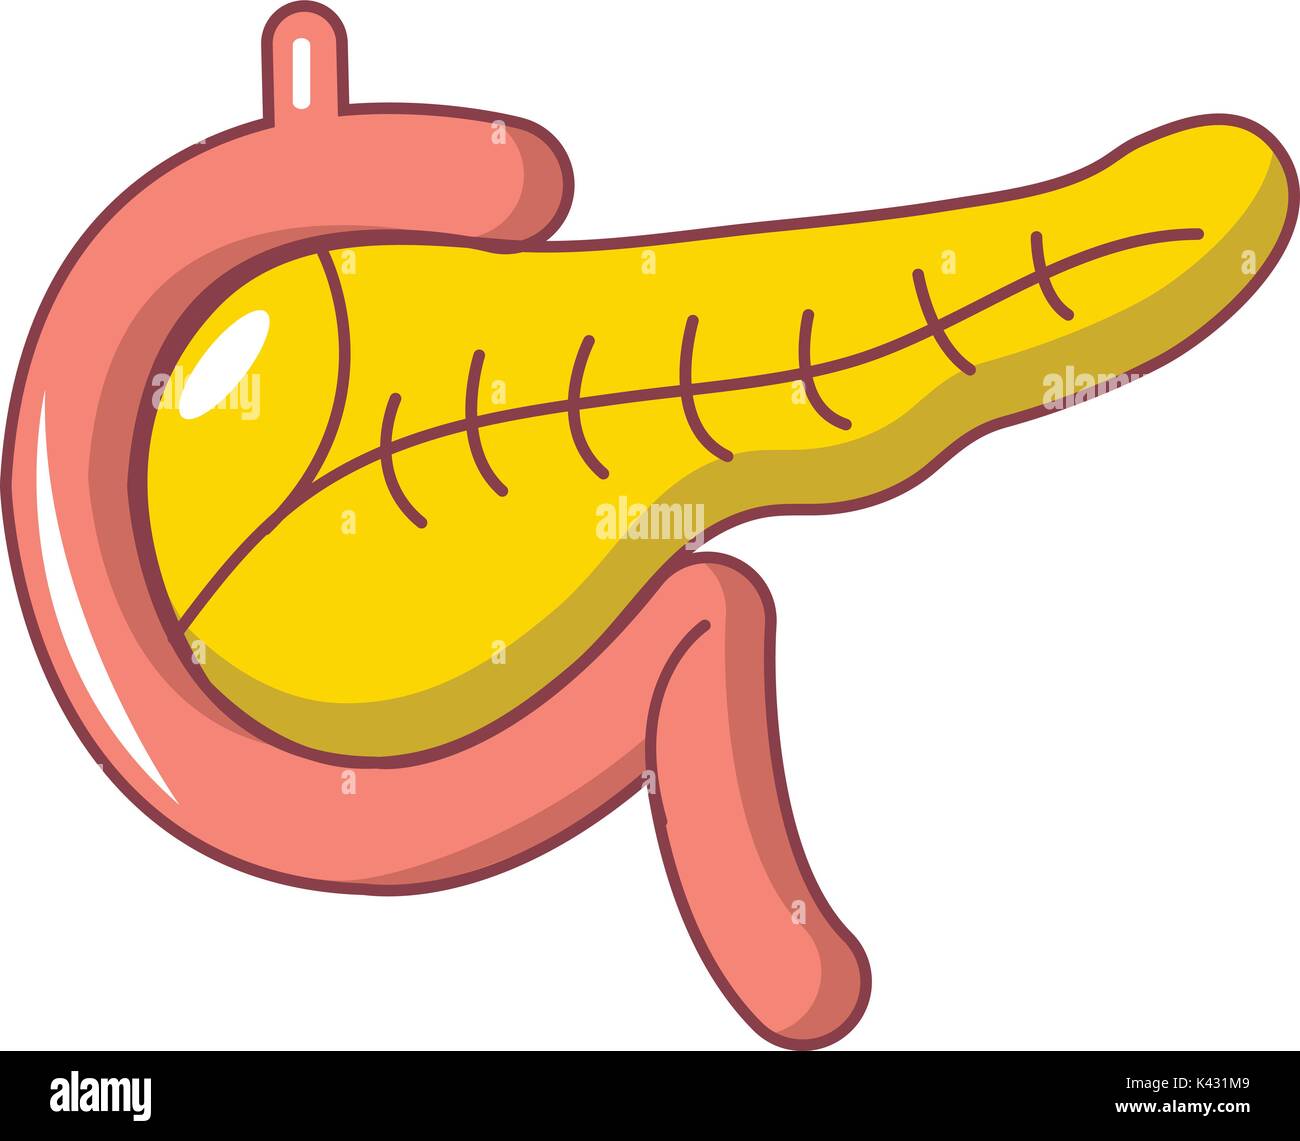 Pancreas Illustration Stock Photos & Pancreas Illustration Stock Images